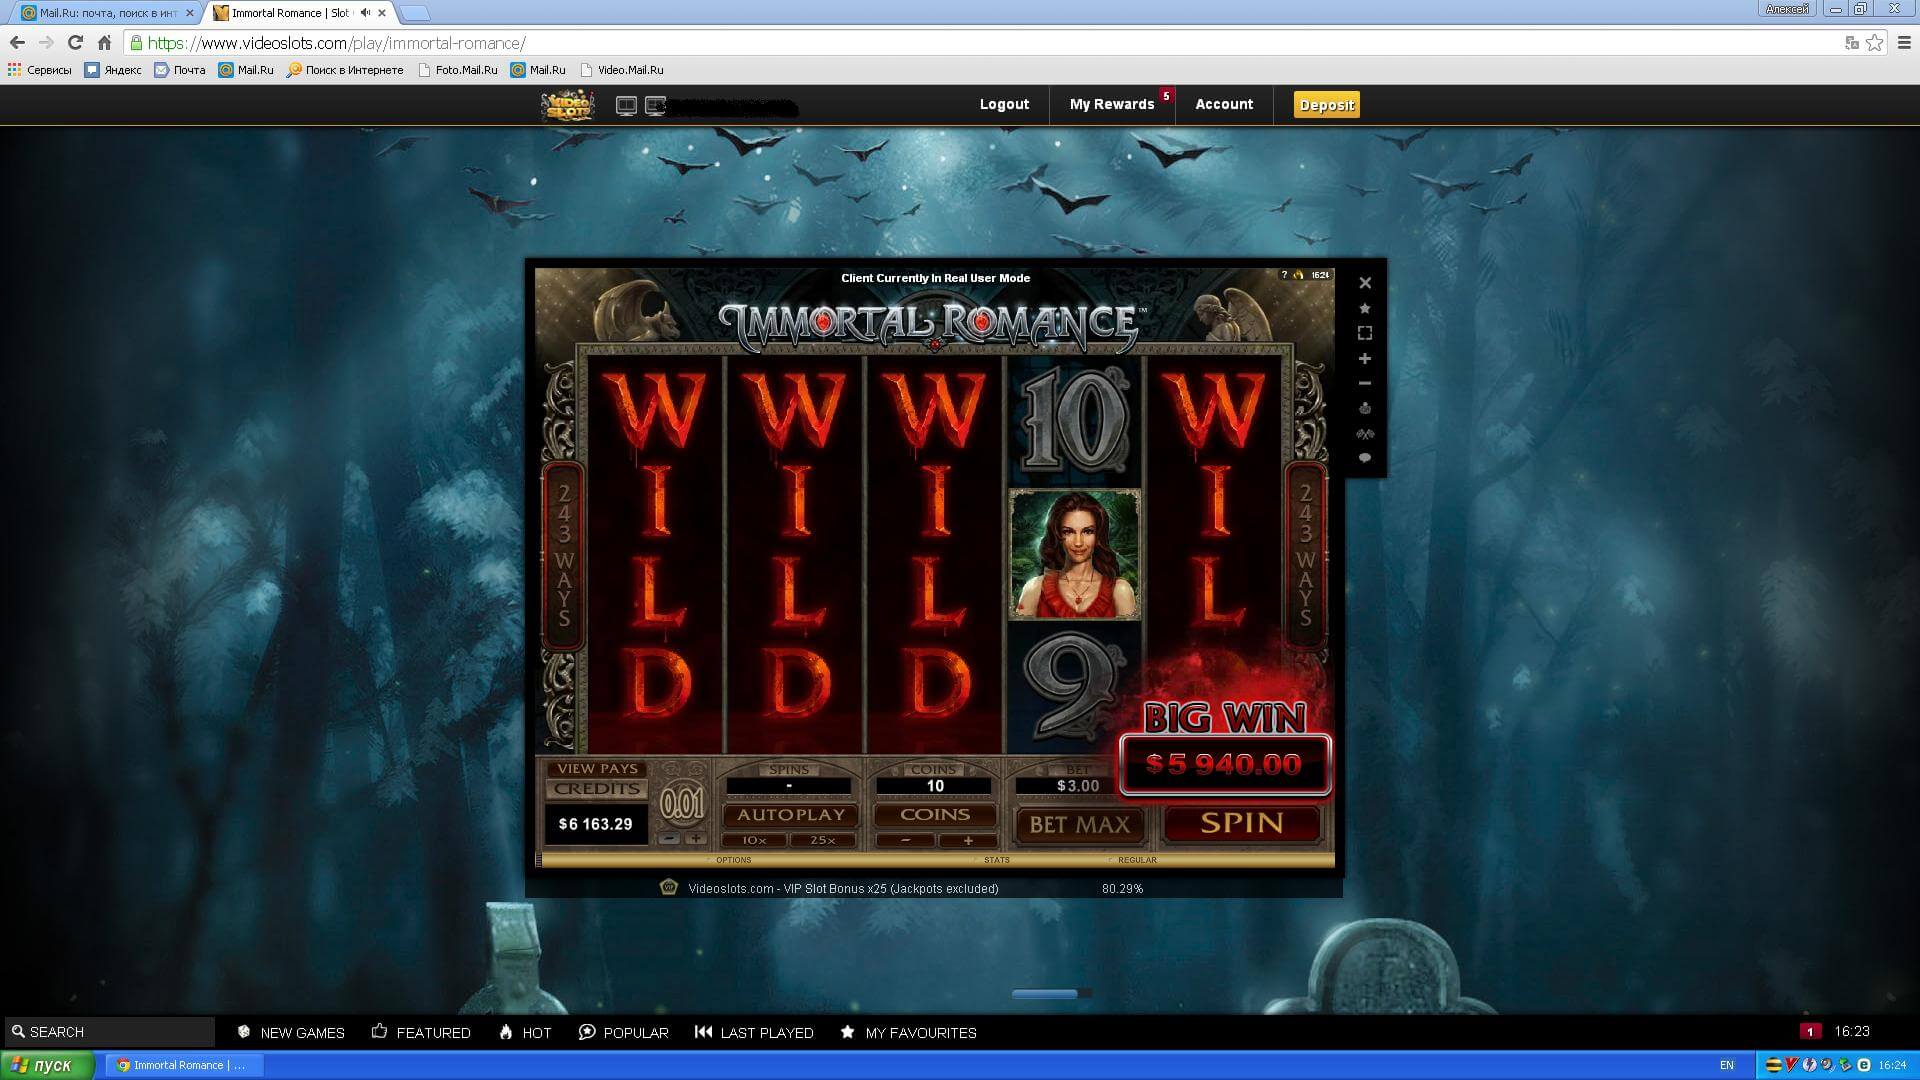 Online casino 888 free